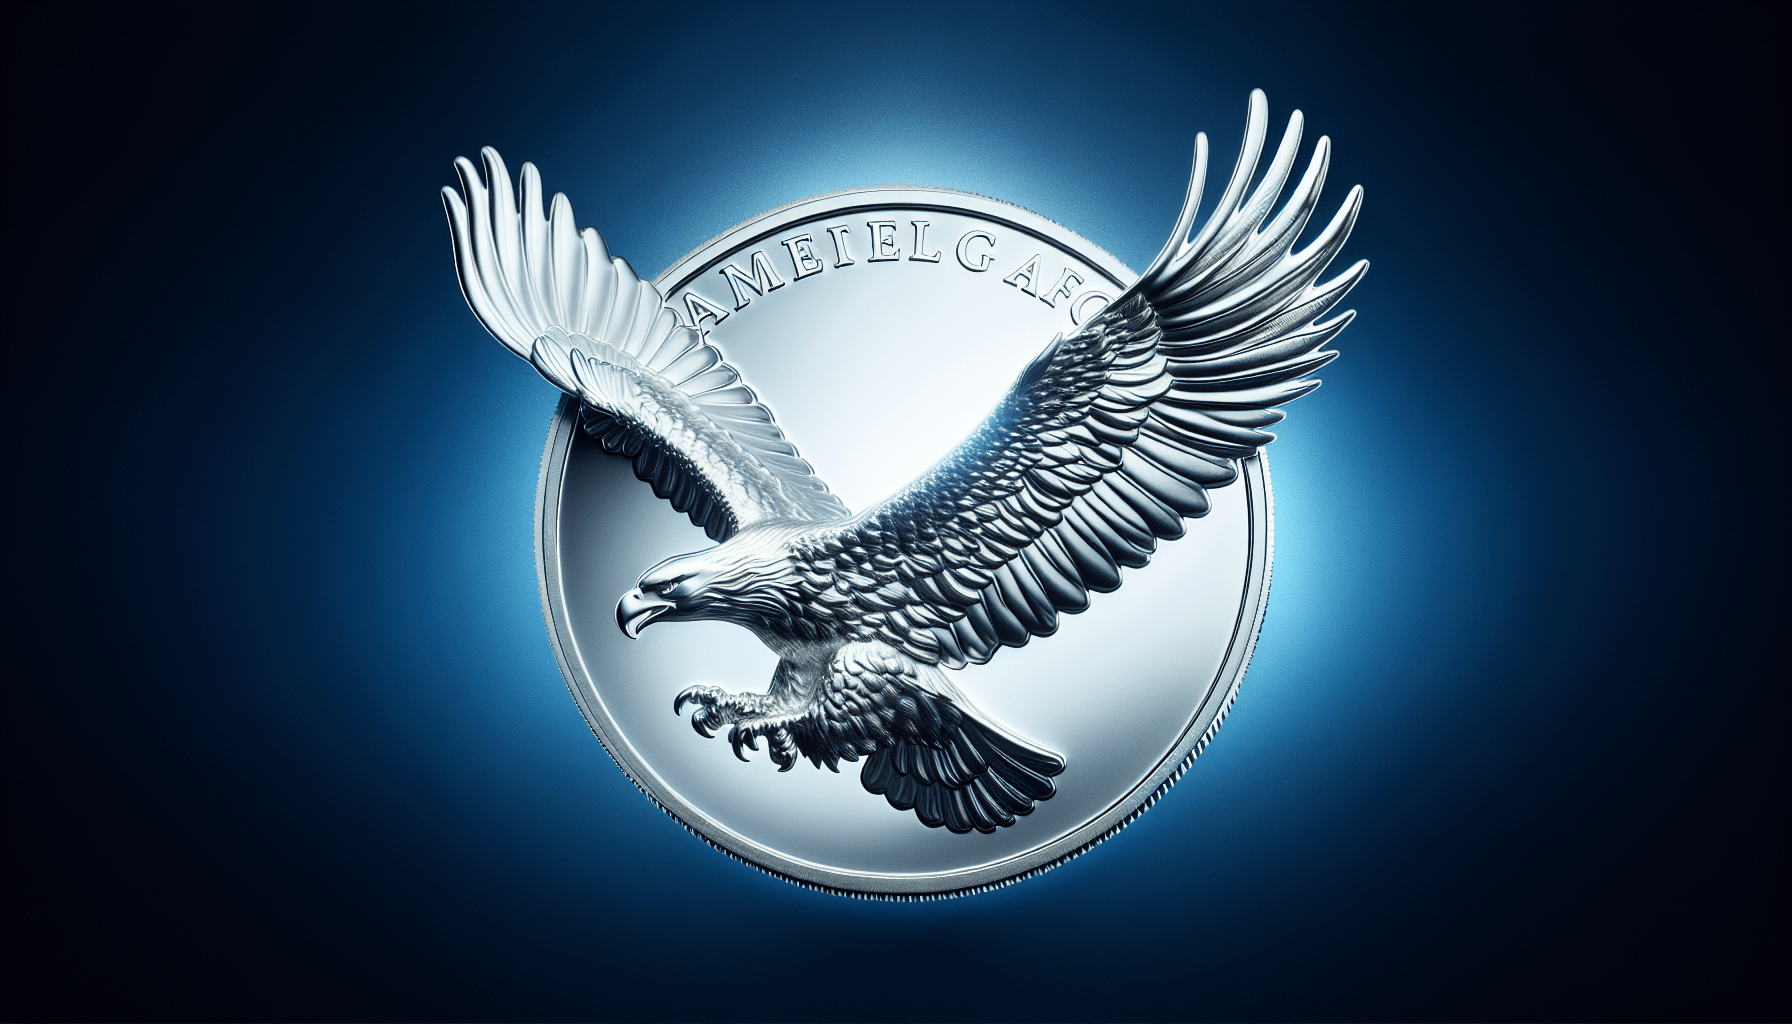 1 oz American Silver Eagle Coin Review